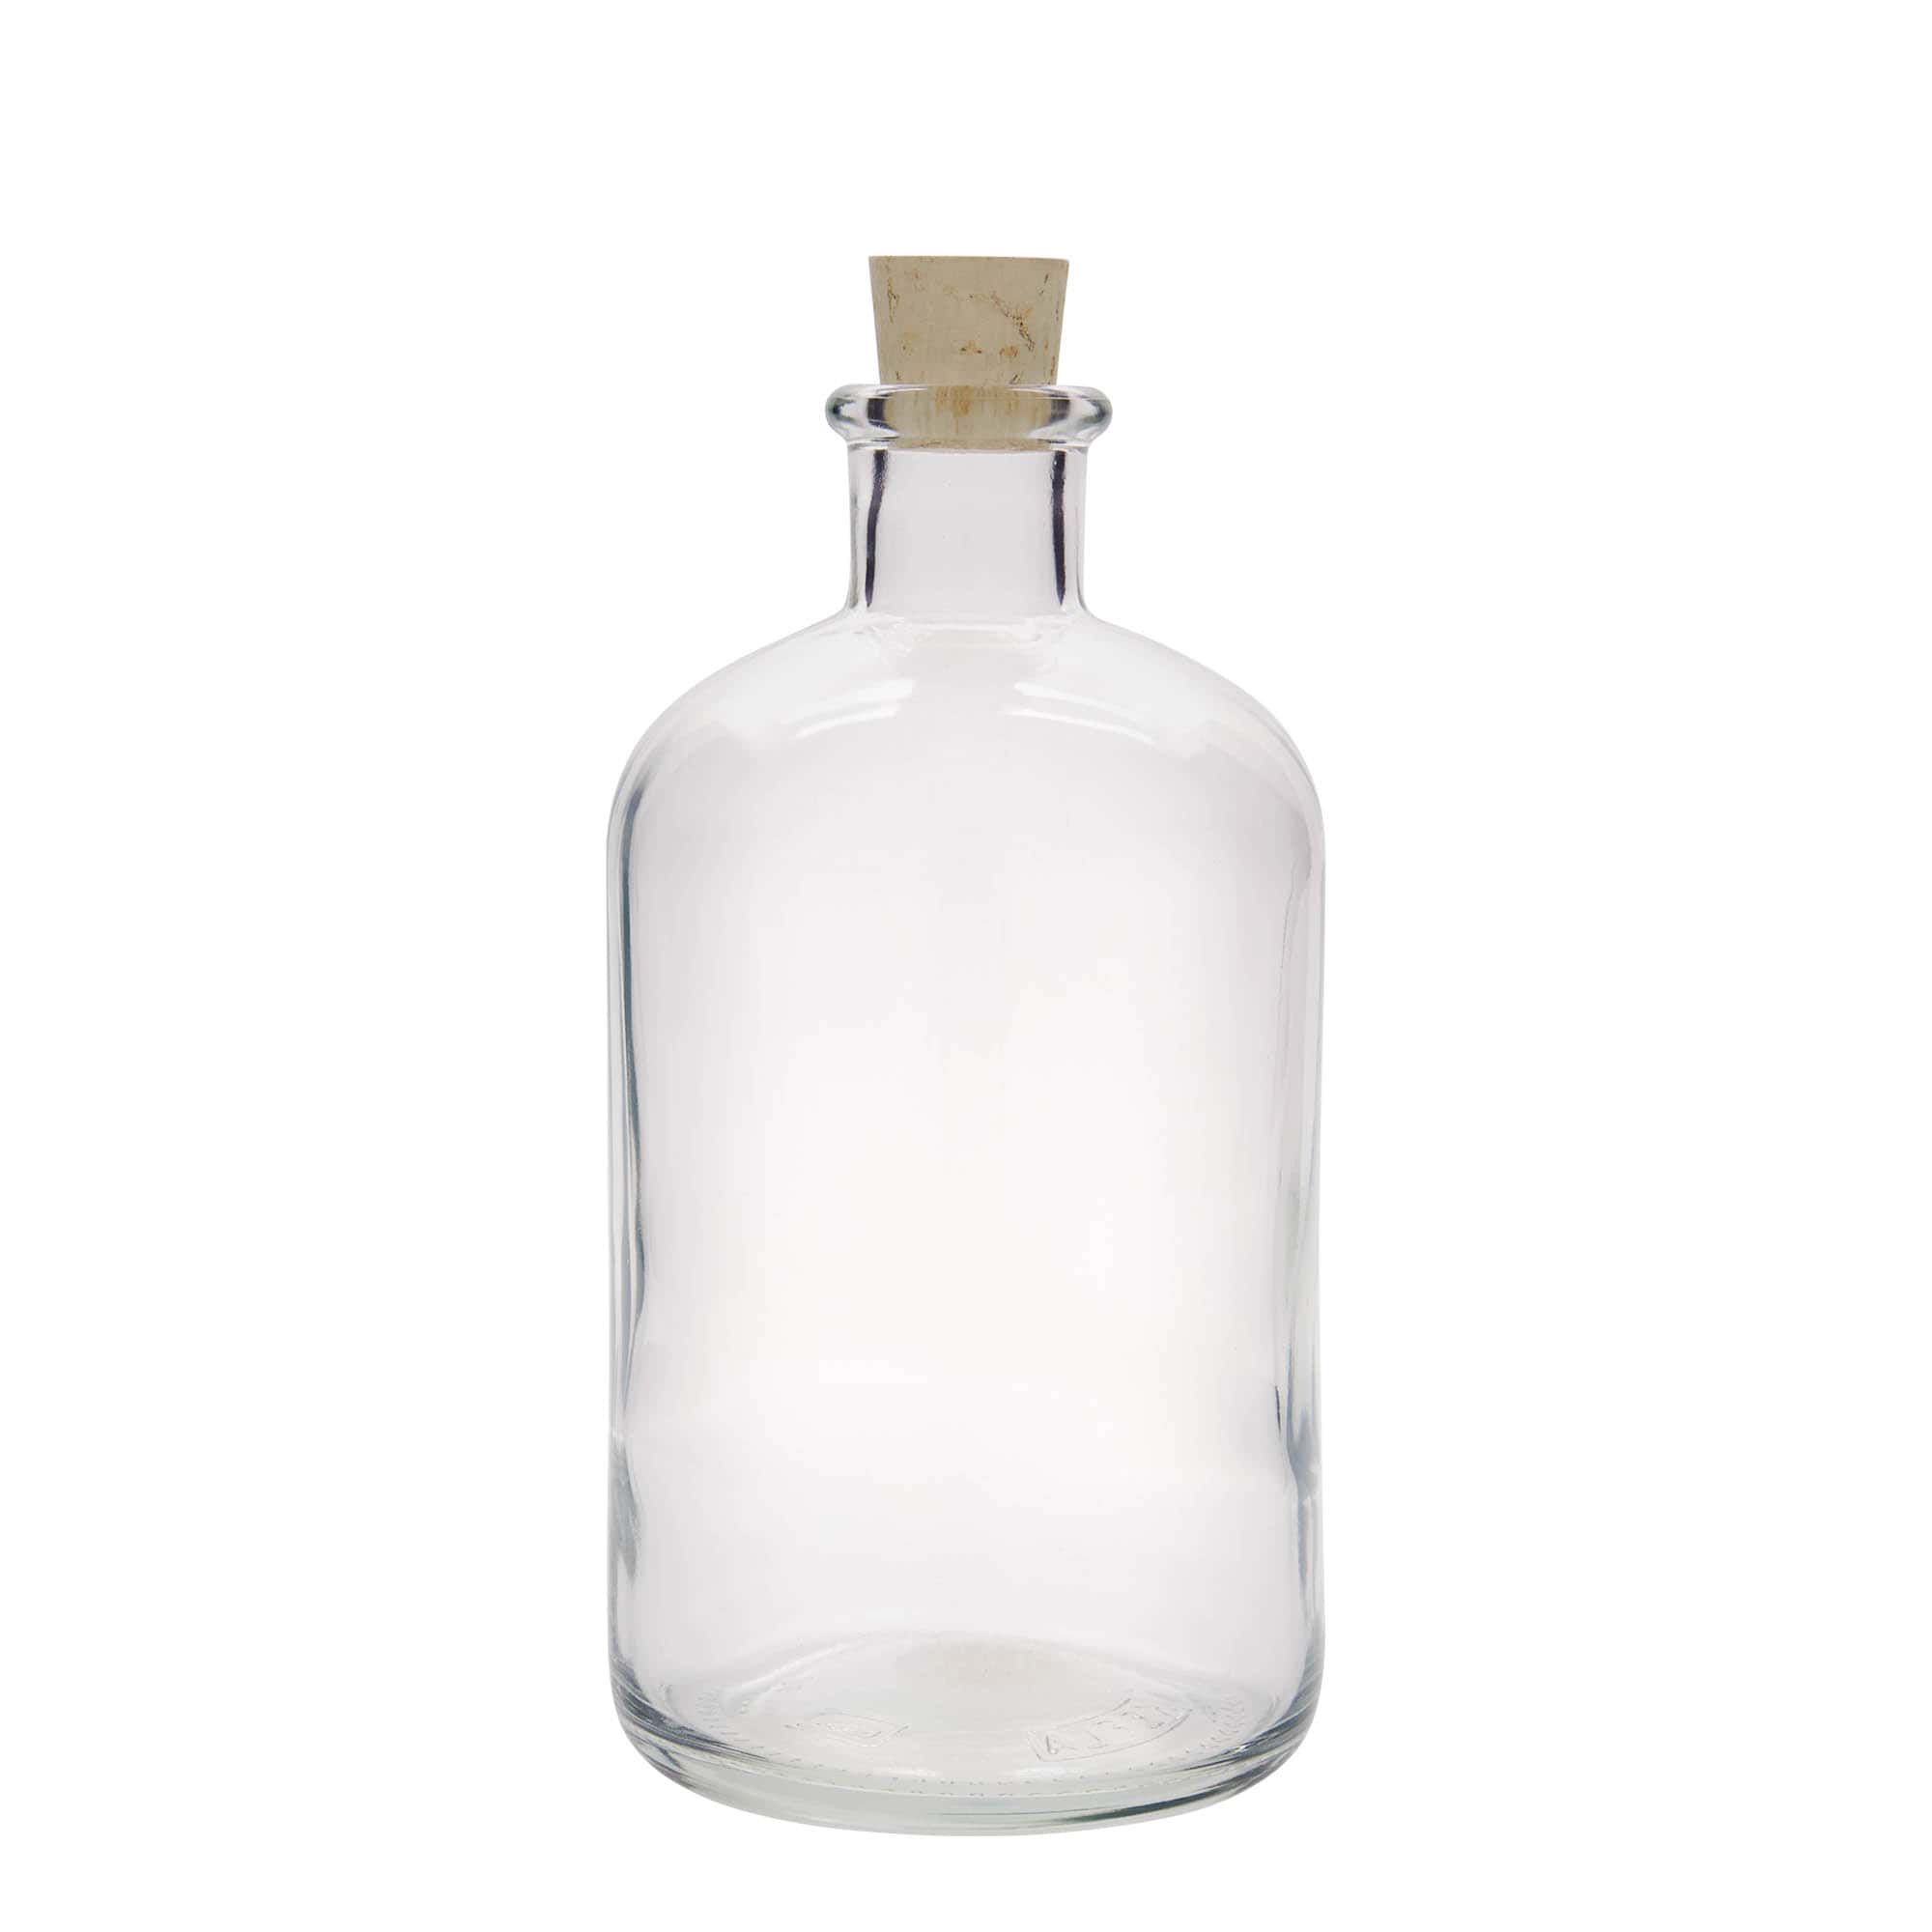 1,000 ml glass apothecary bottle, closure: cork